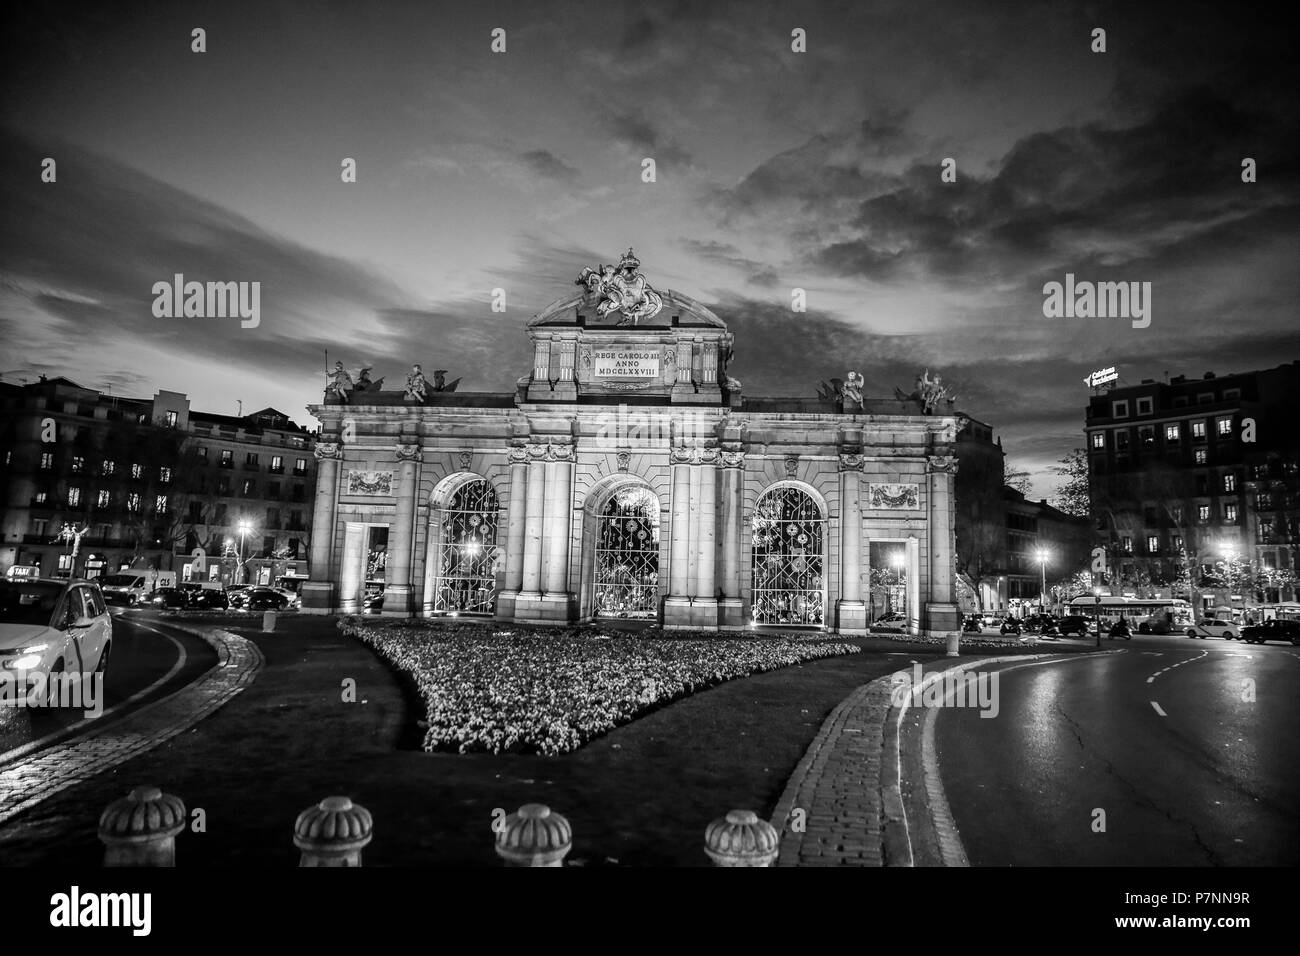 Puerta de alcala Black and White Stock Photos & Images - Alamy